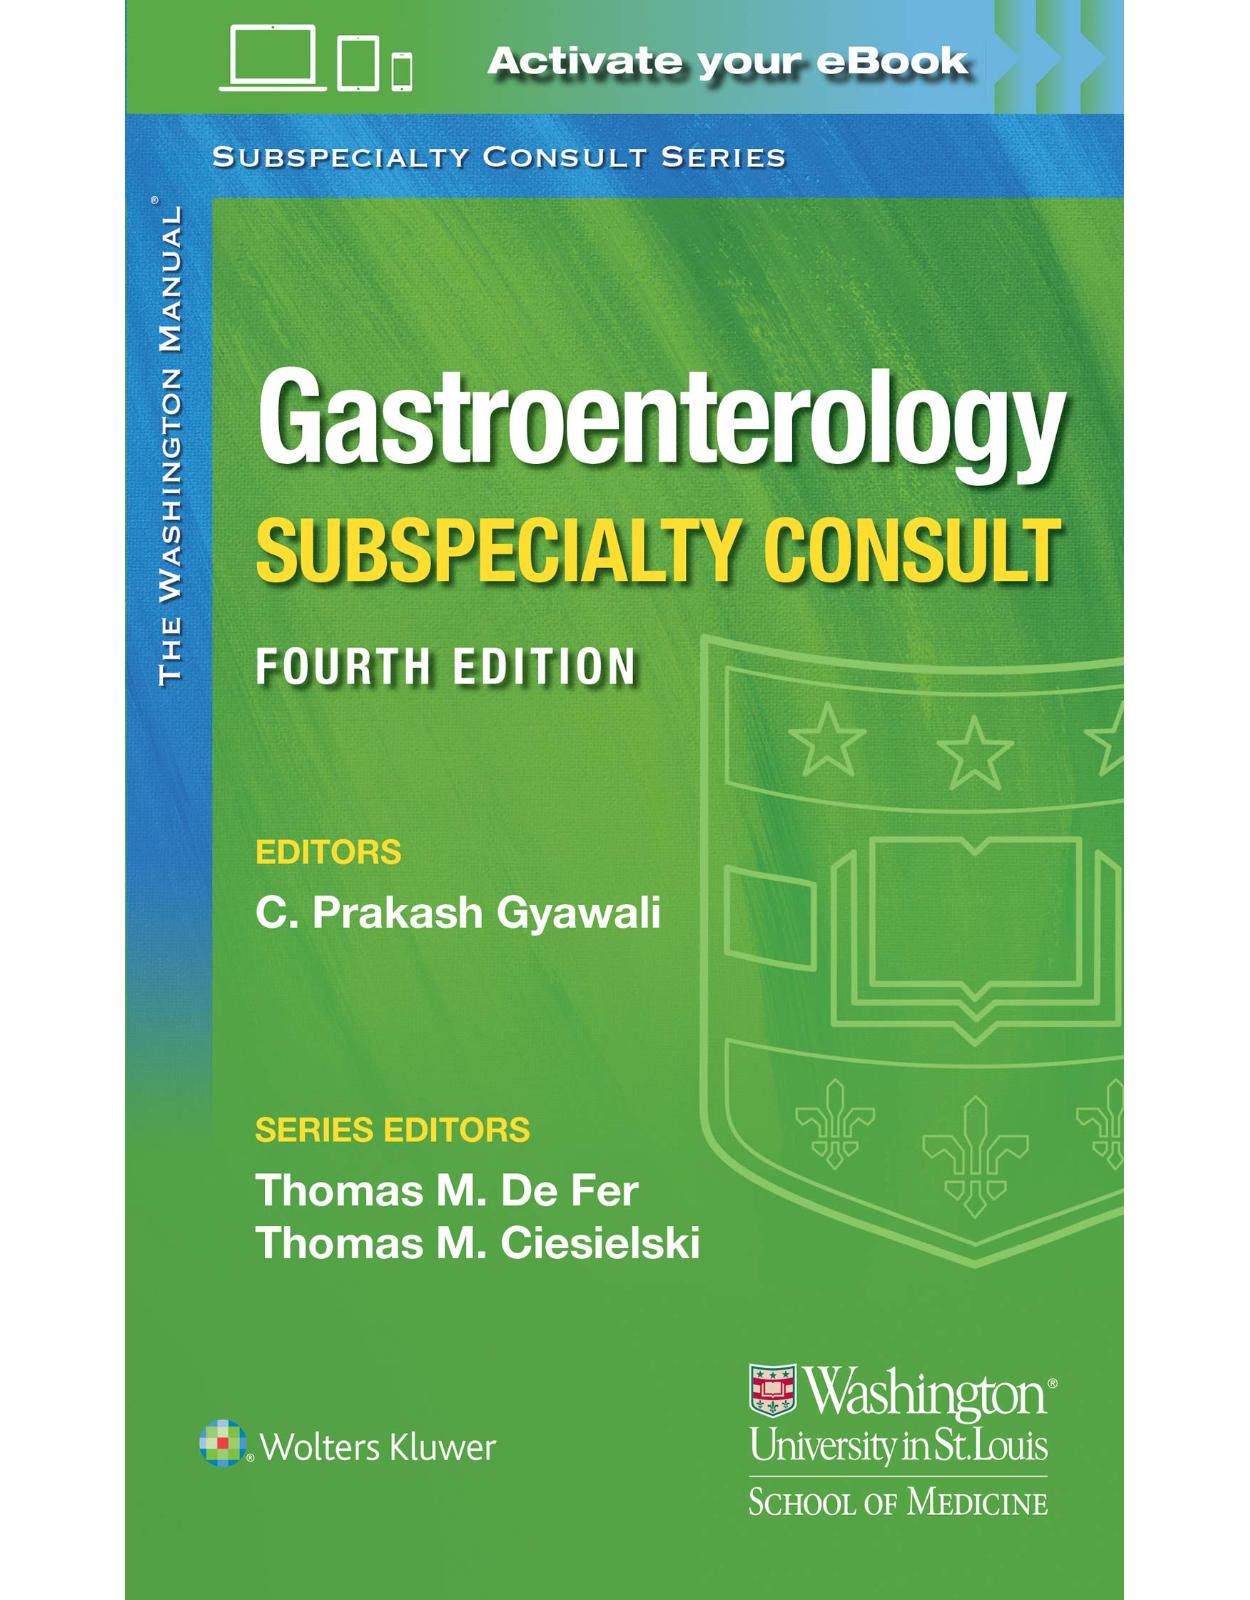 The Washington Manual Gastroenterology Subspecialty Consult